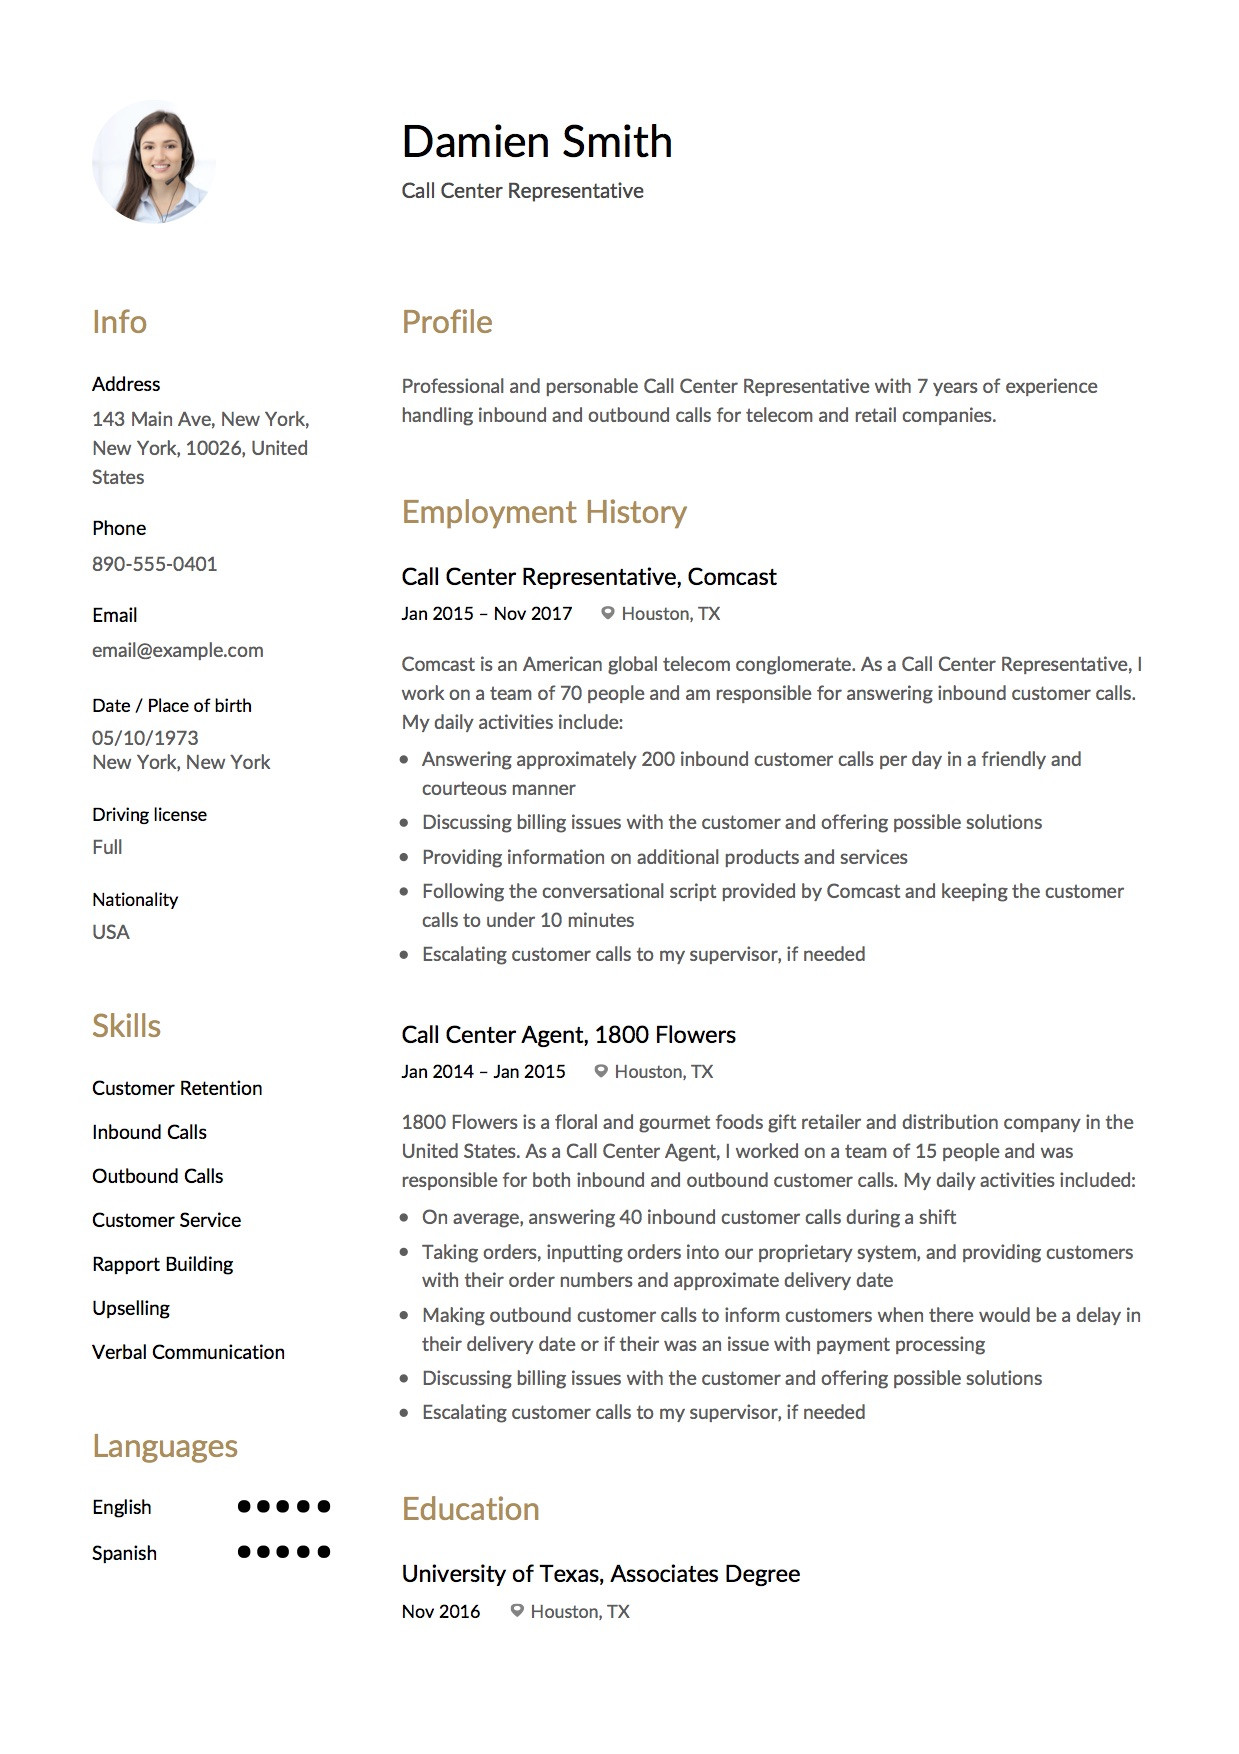 Sample Resume for Entry Level Non Voice Representative Call Center Resume & Guide (lancarrezekiq 12 Free Downloads) 2022